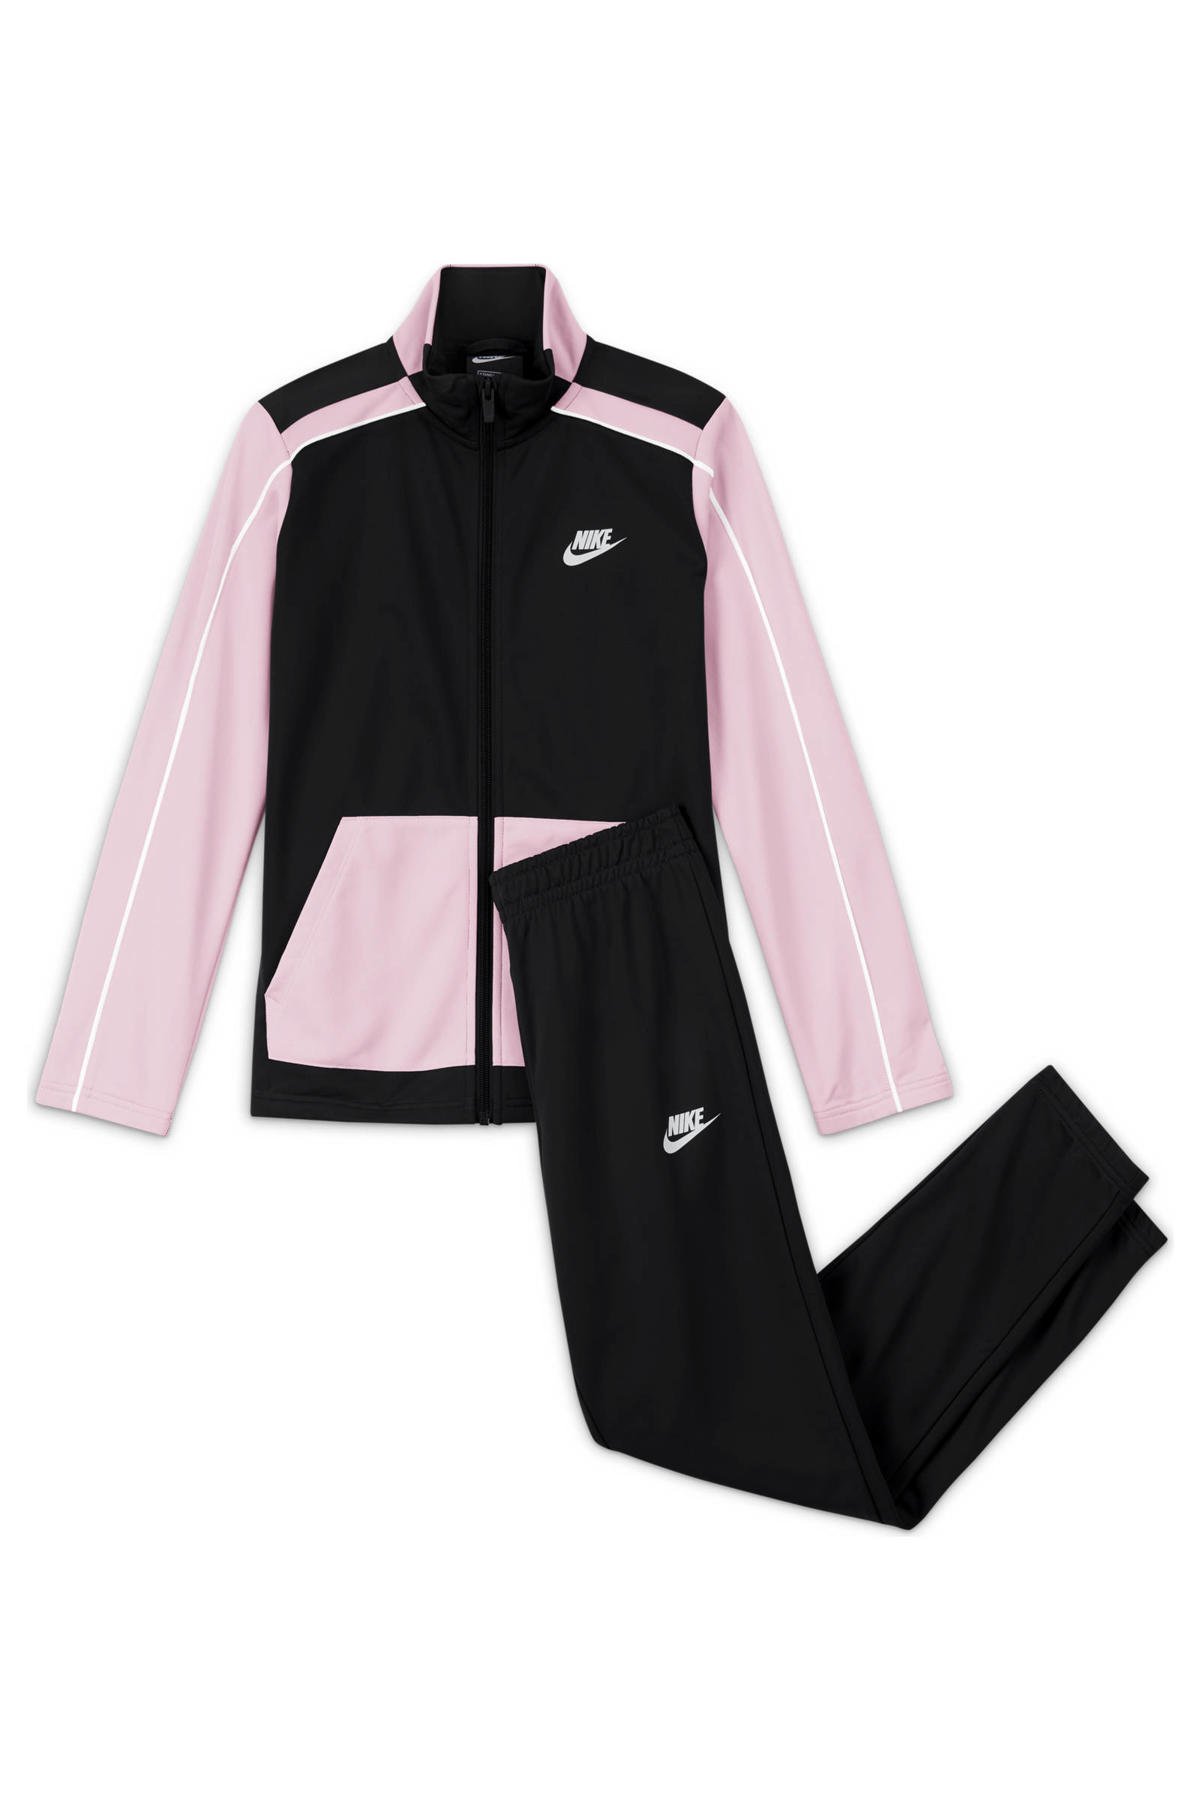 Panda muis of rat verkorten Nike trainingspak zwart/roze | wehkamp